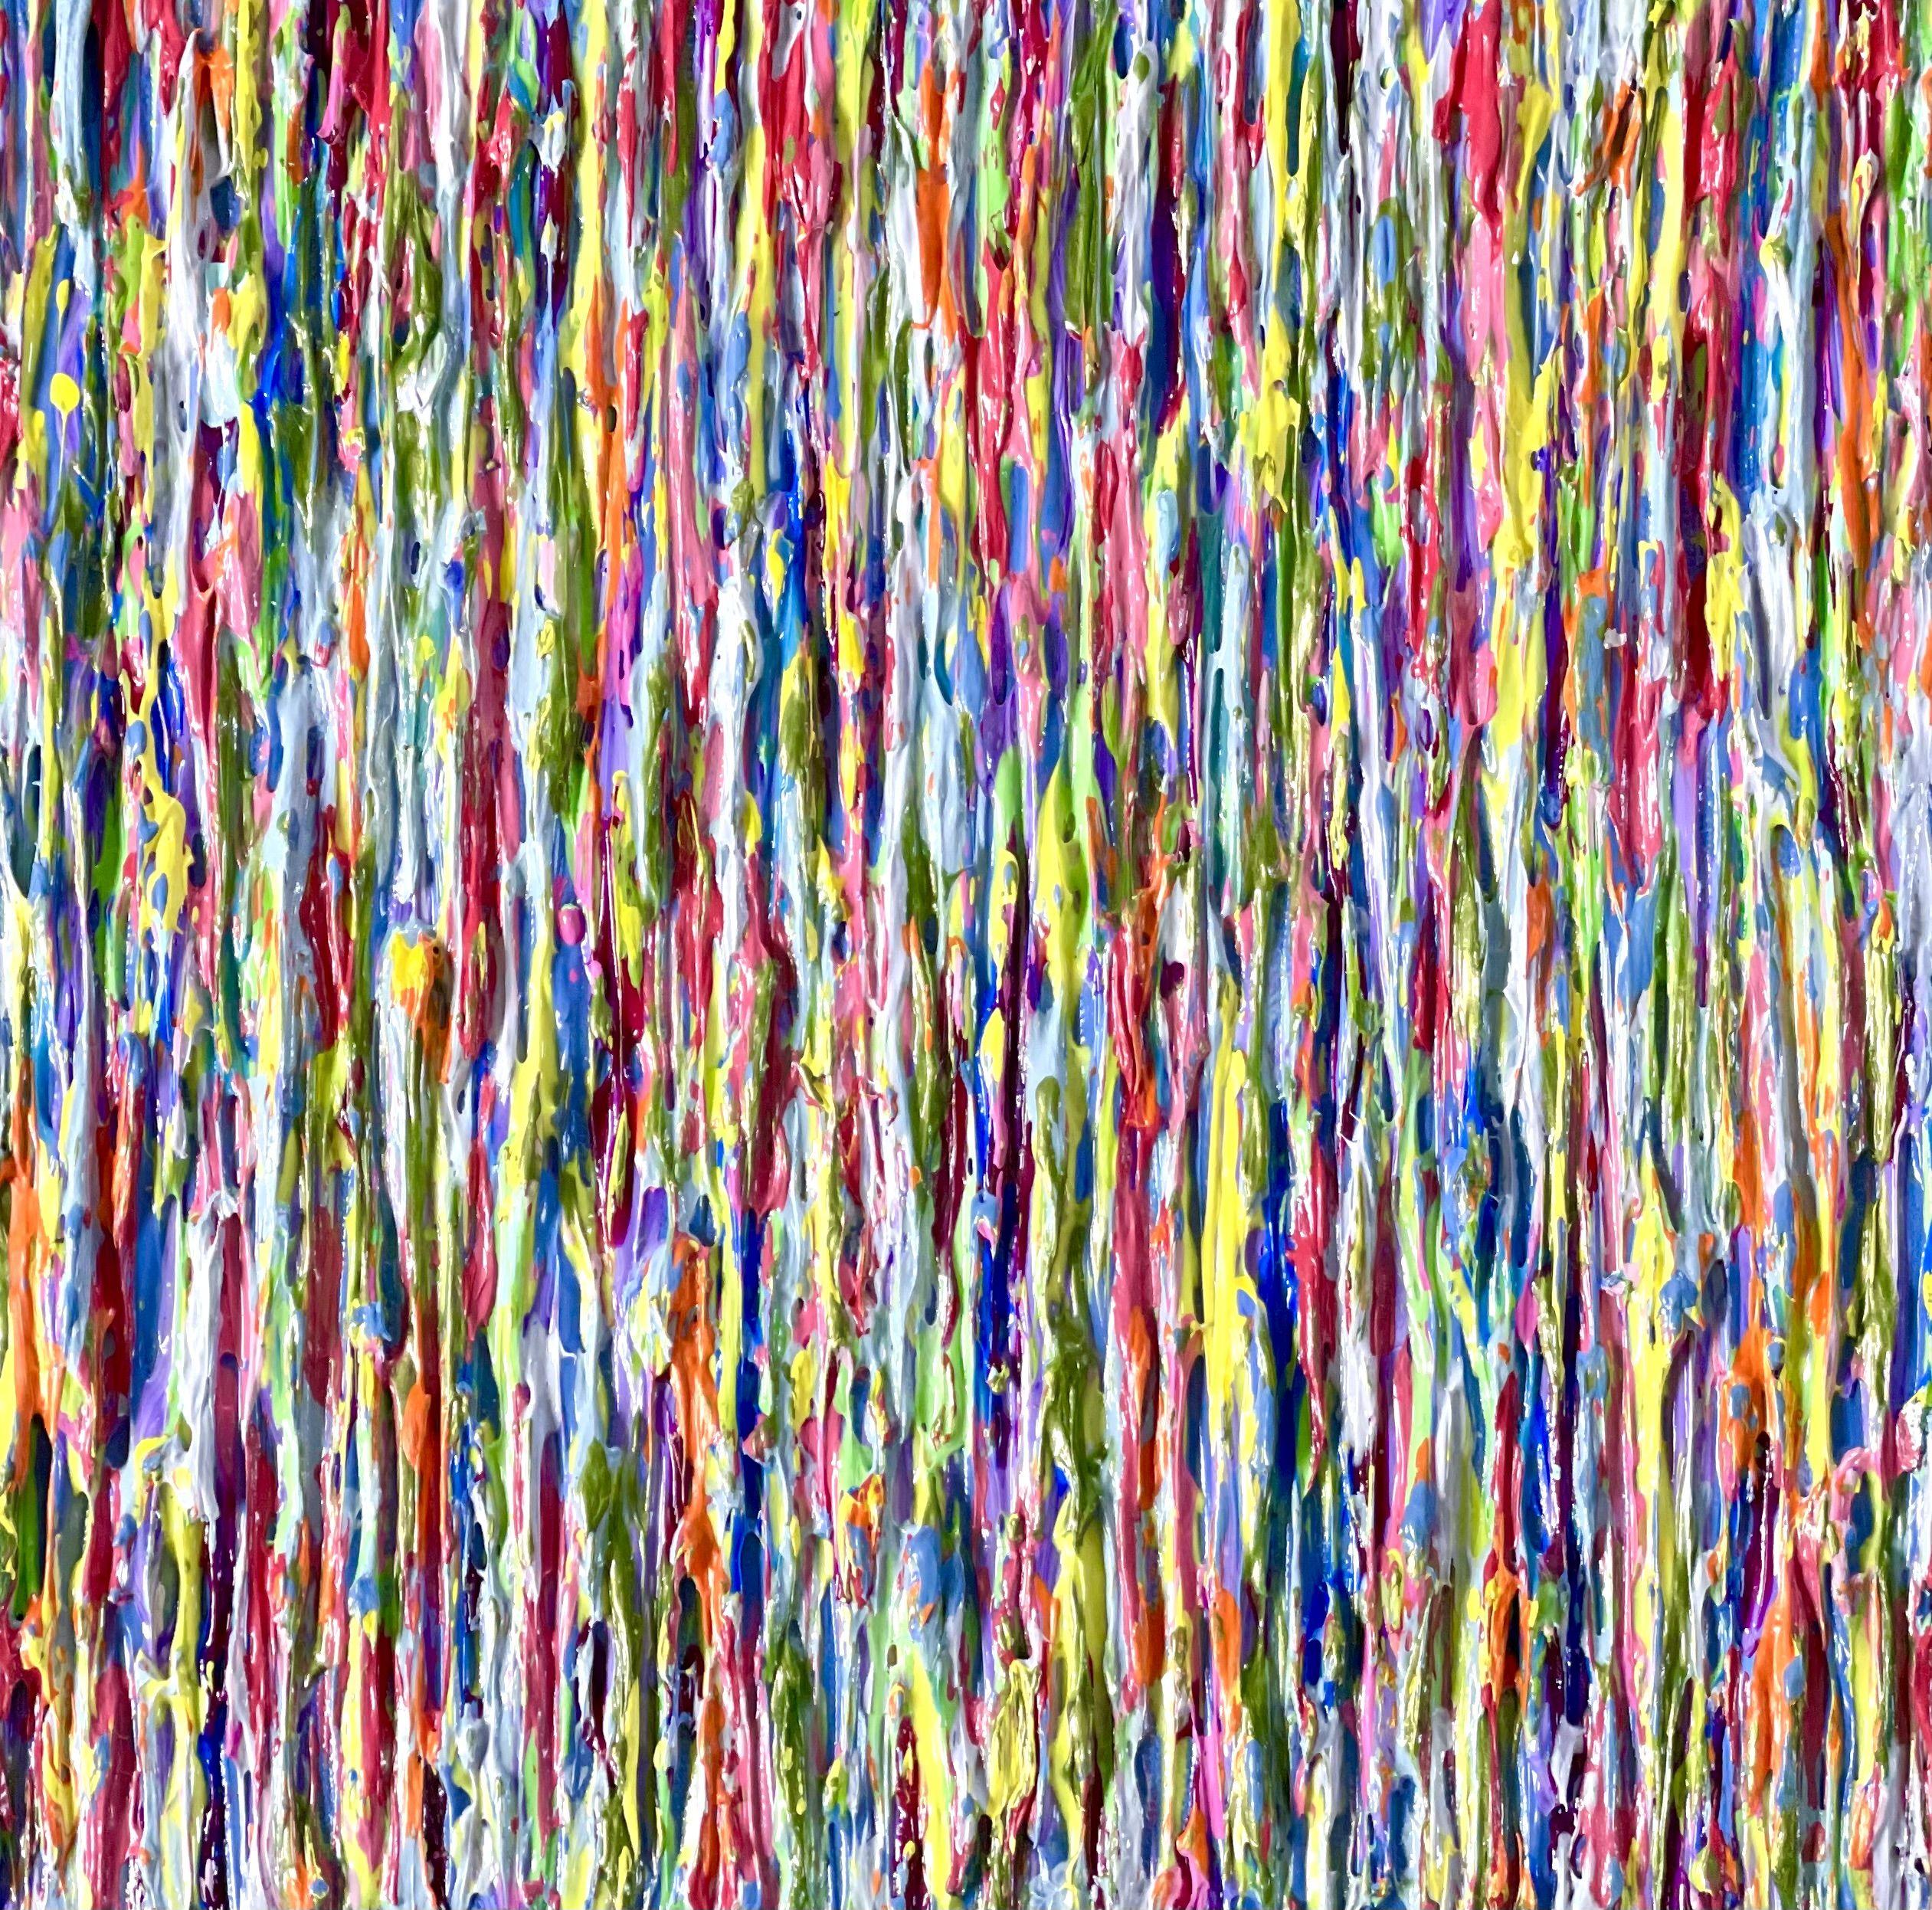 Hall of colors, Mixed Media on Canvas - Mixed Media Art by Daniela Pasqualini